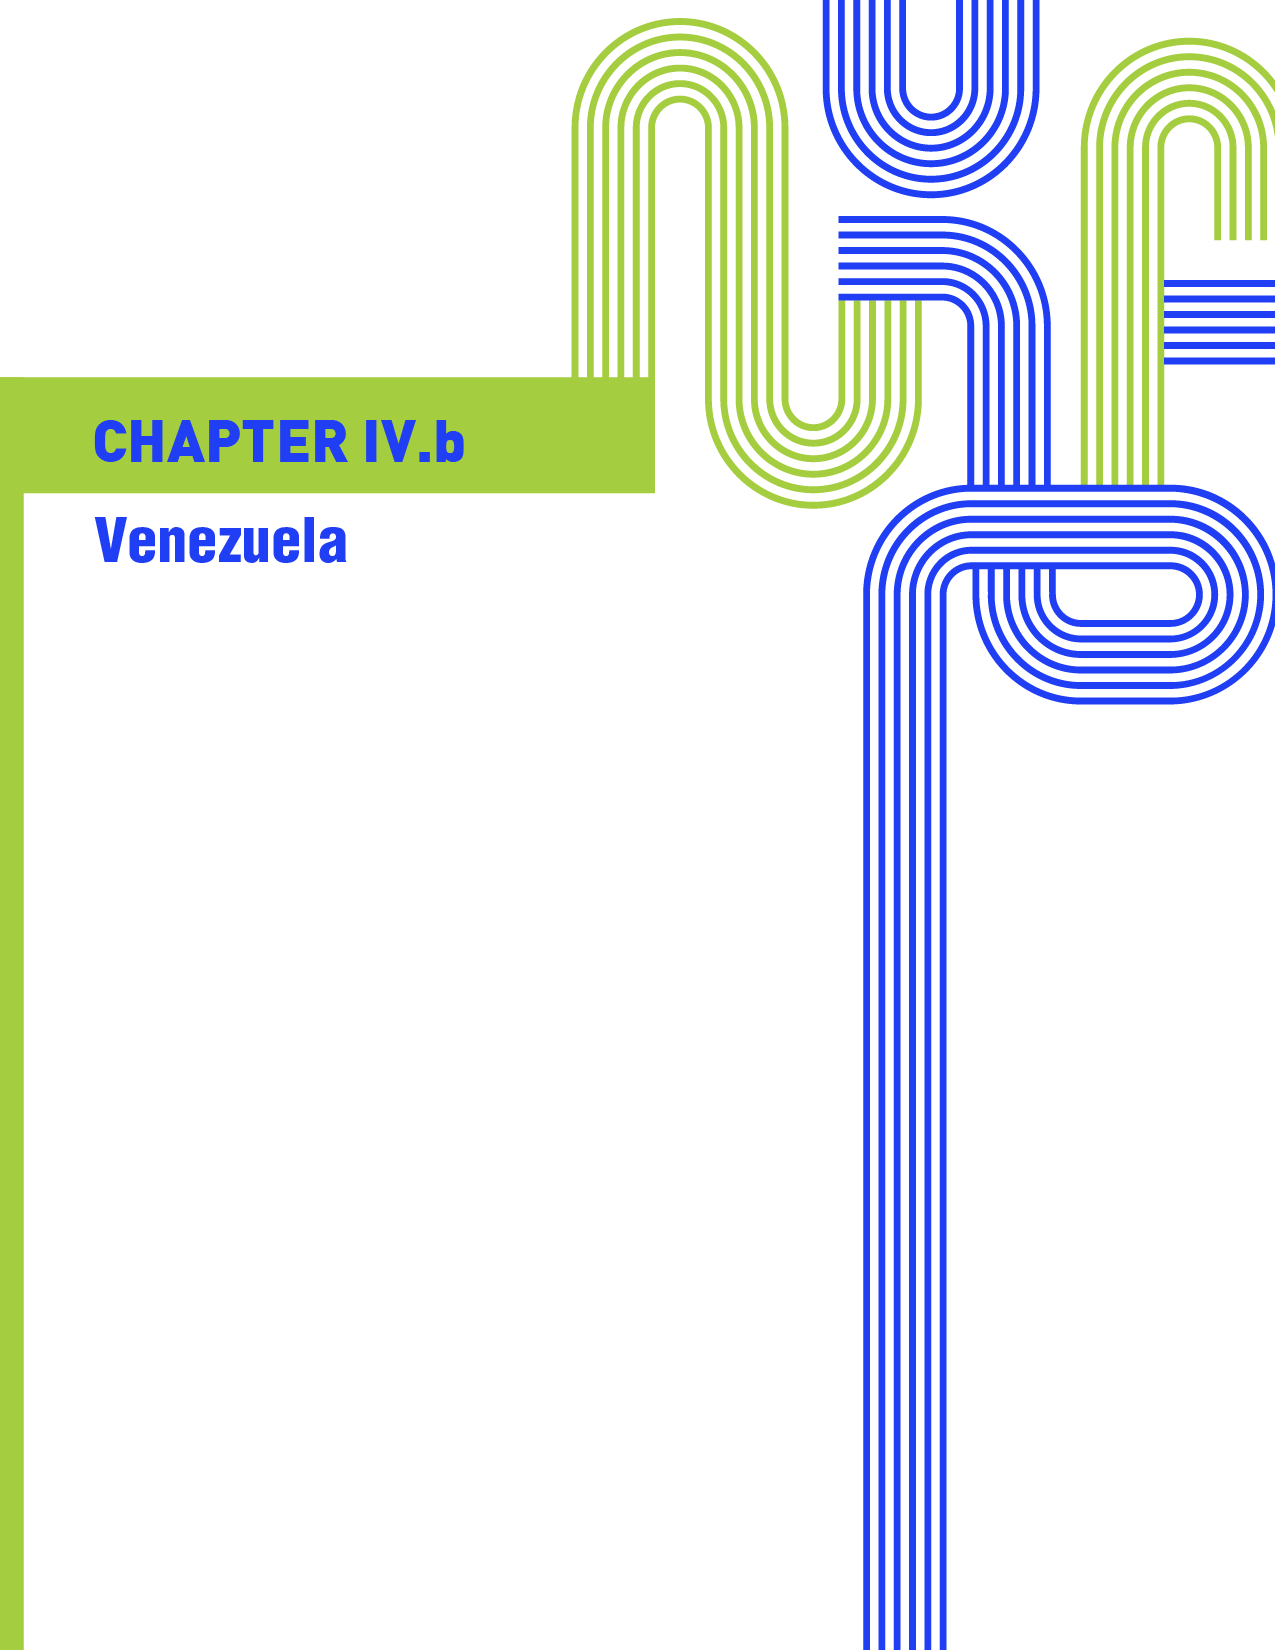 2022 Annual Report: Chapter IV. B - Venezuela